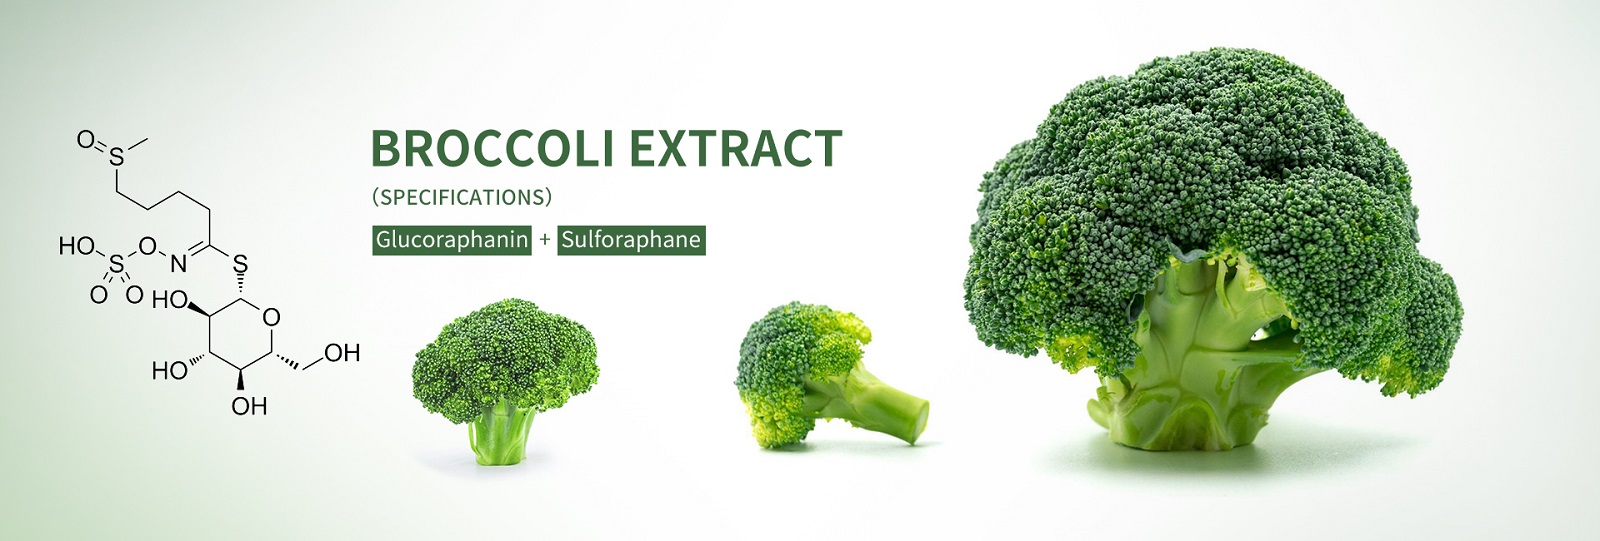 broccoli extract glucoraphanin Sulforaphane